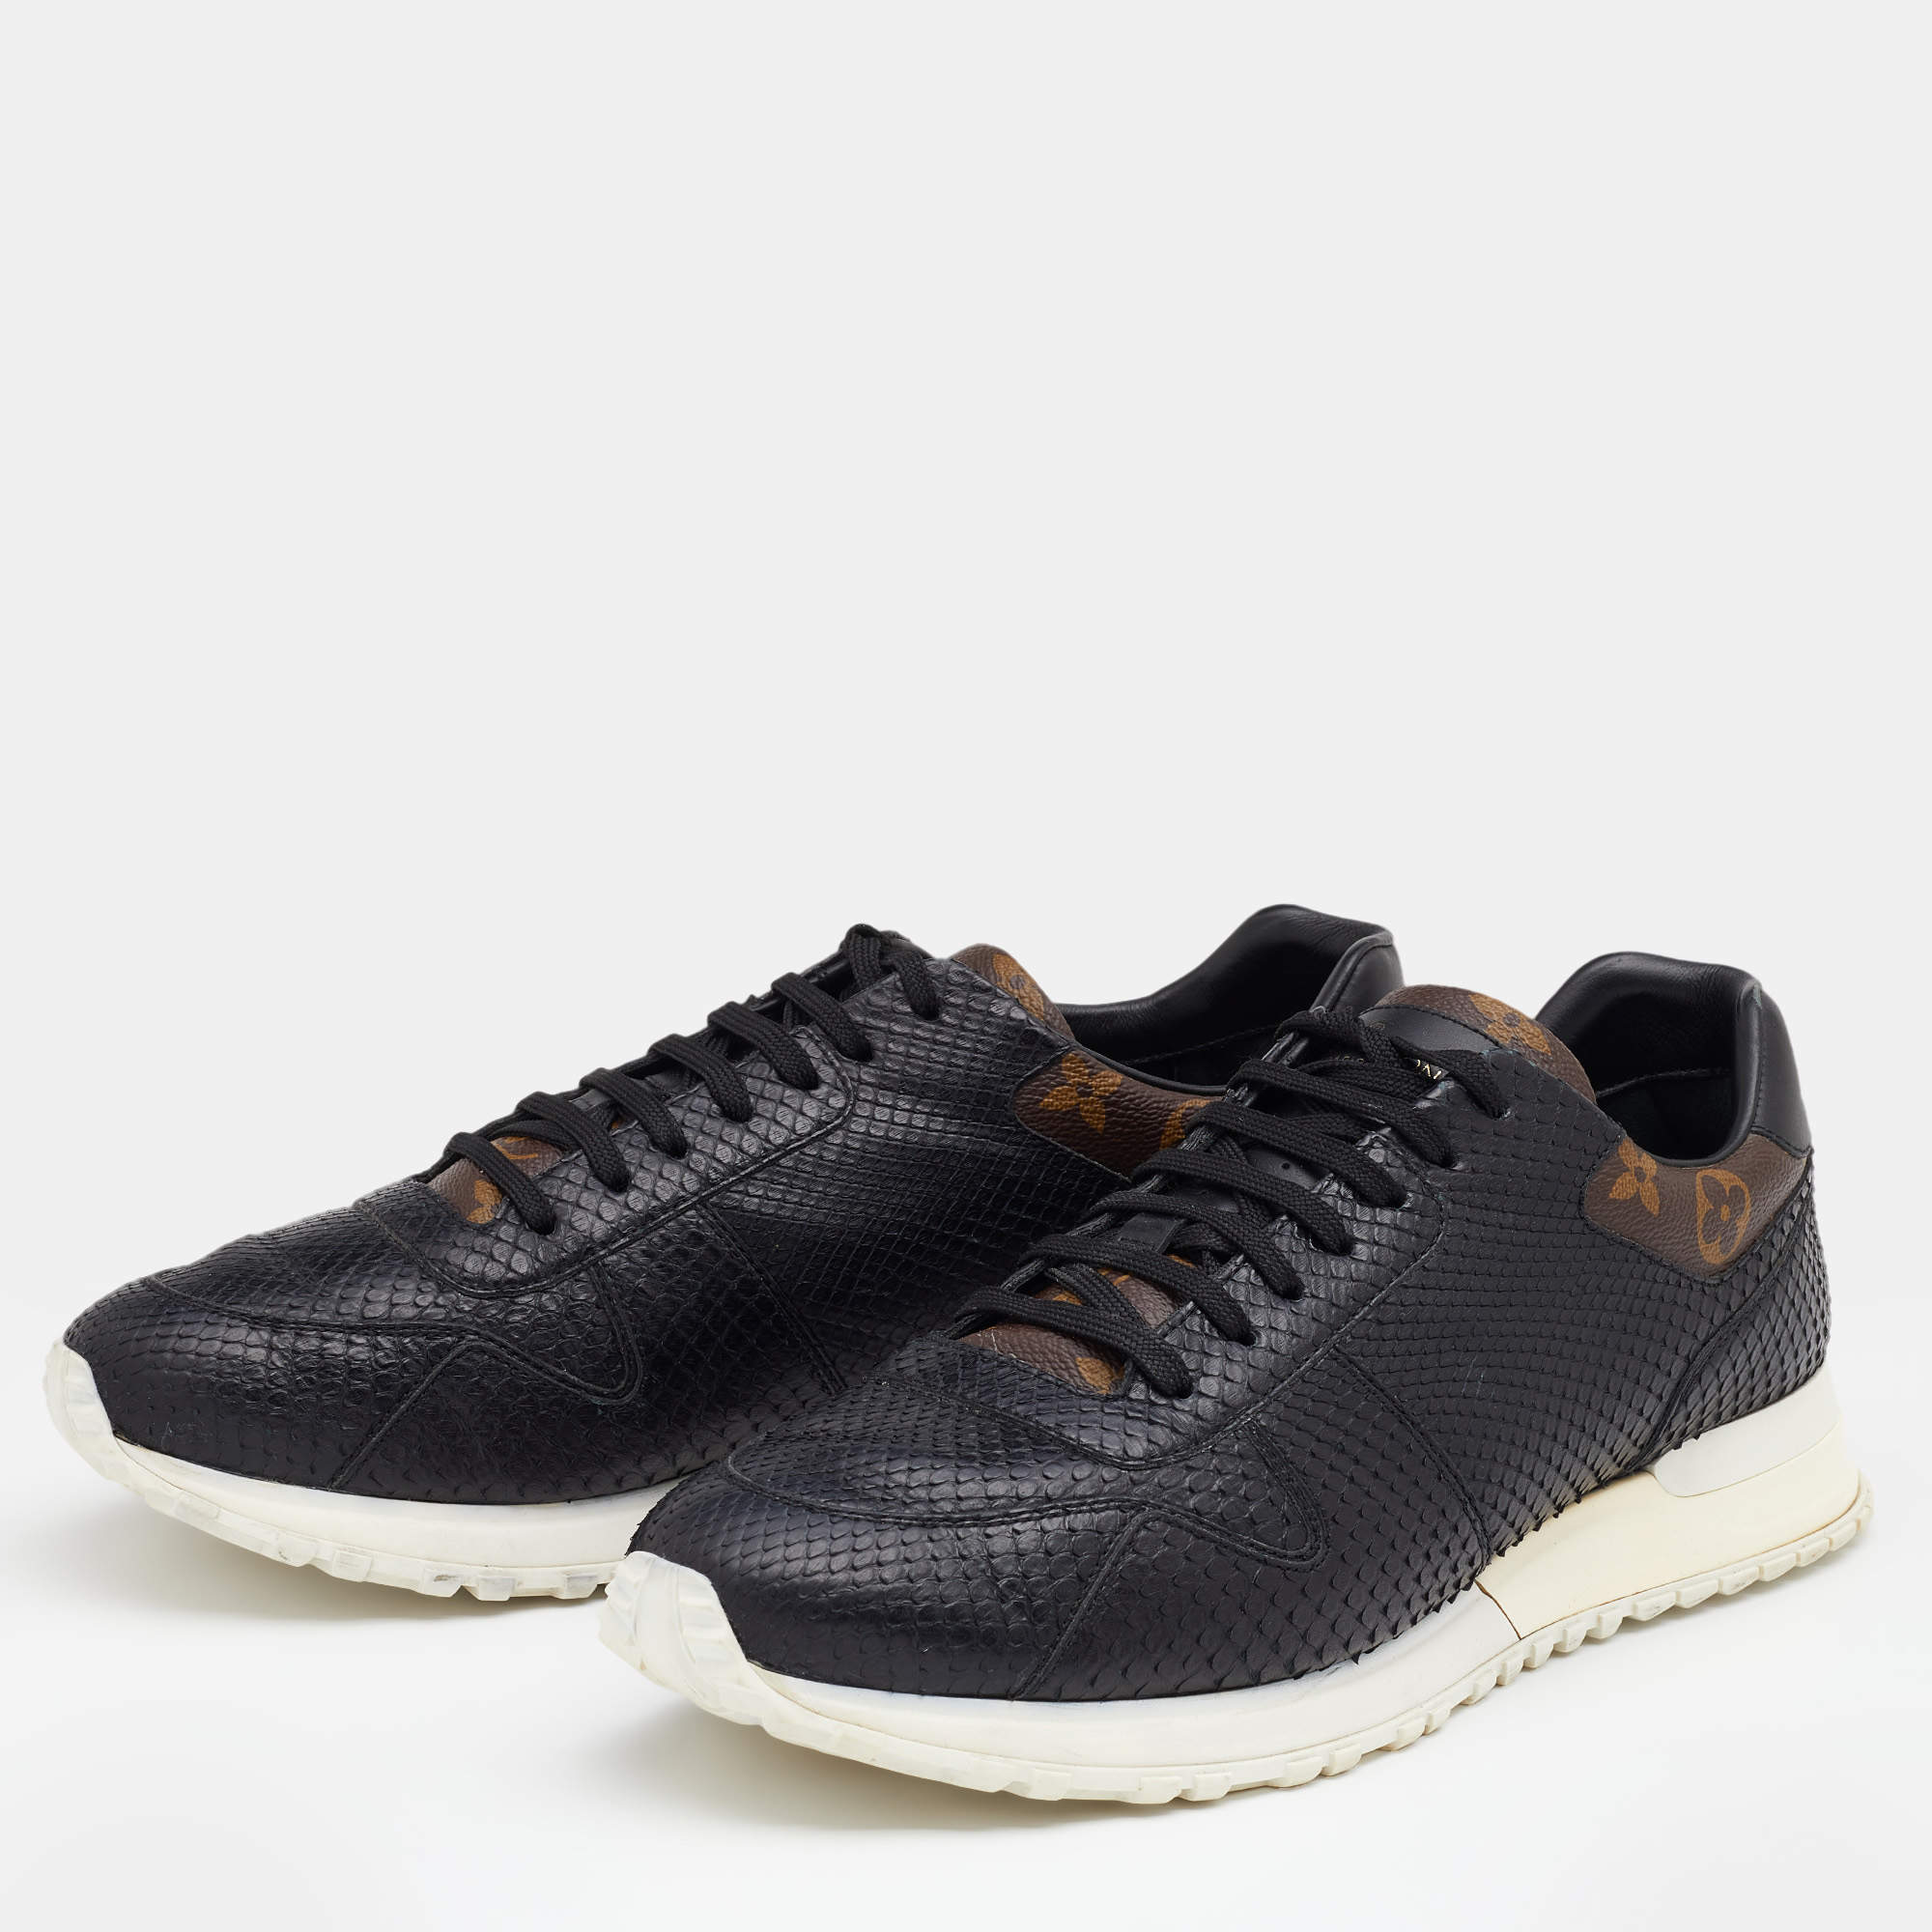 Louis Vuitton Beige/Brown Python Low Top Sneakers Size 41 Louis Vuitton